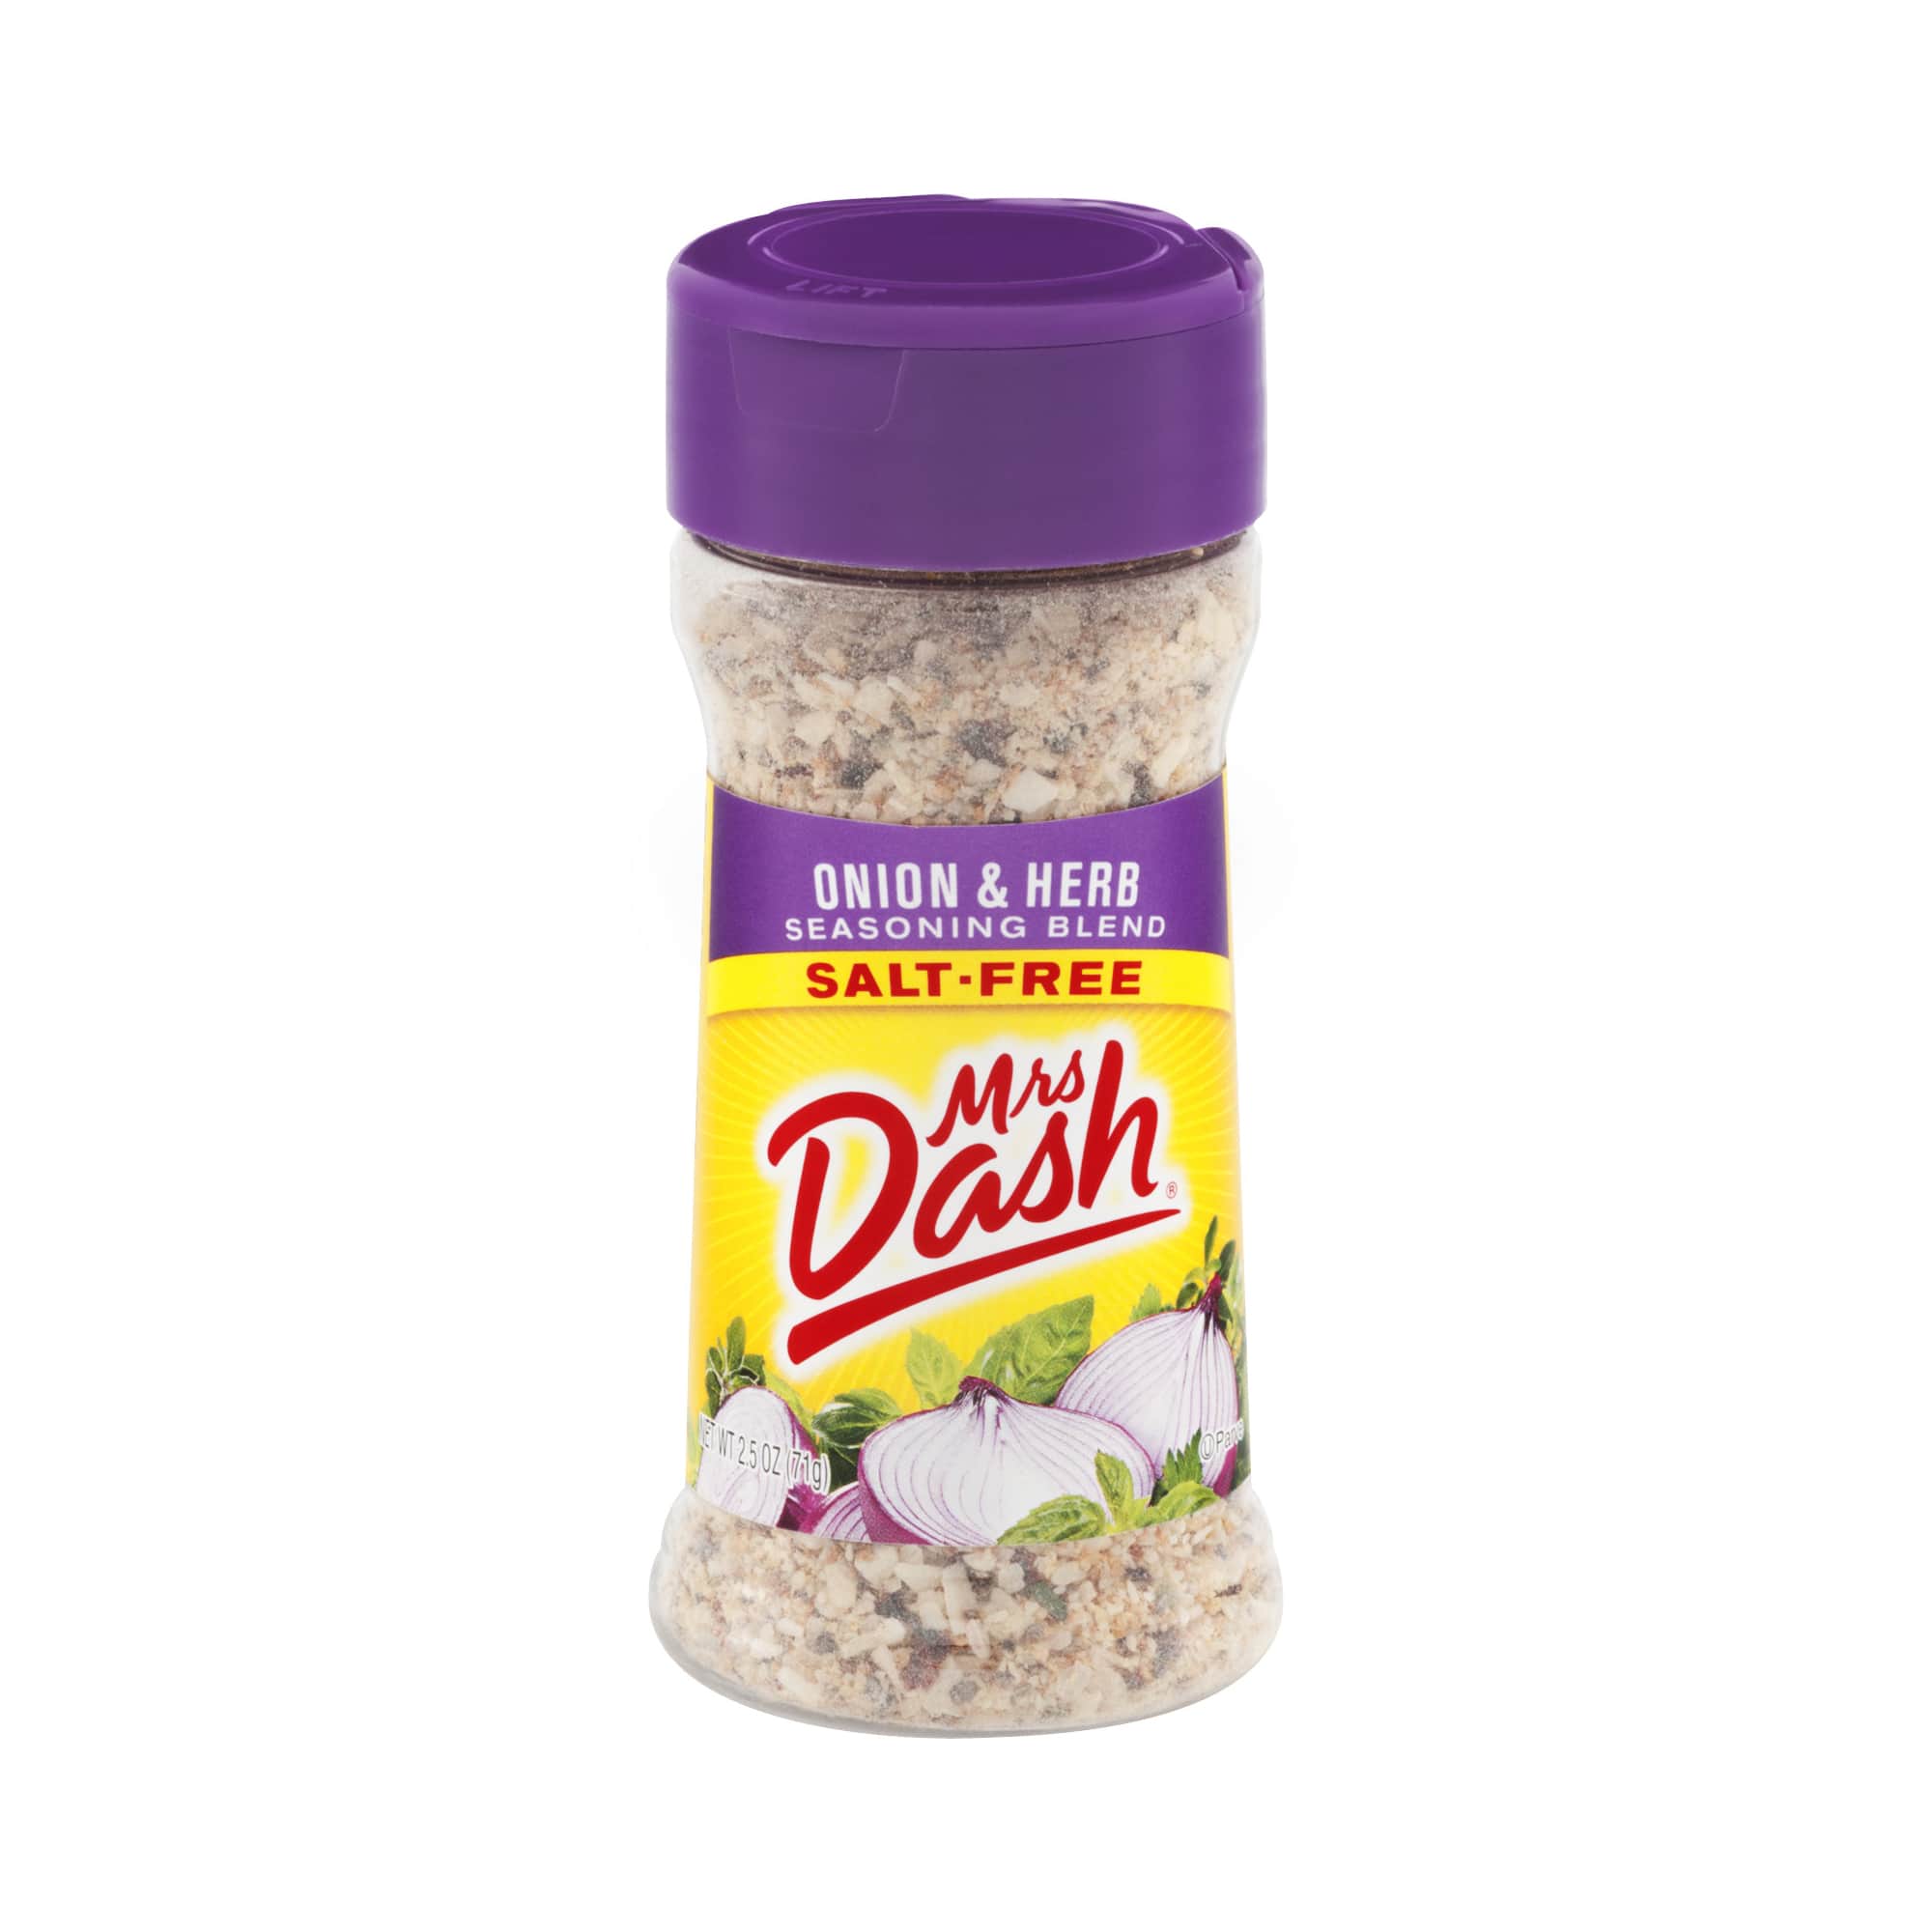 https://americanfoodmart.co.uk/wp-content/uploads/2022/03/Mrs-Dash-Onion-Herb-Seasoning-71g-2.5oz-min.jpg